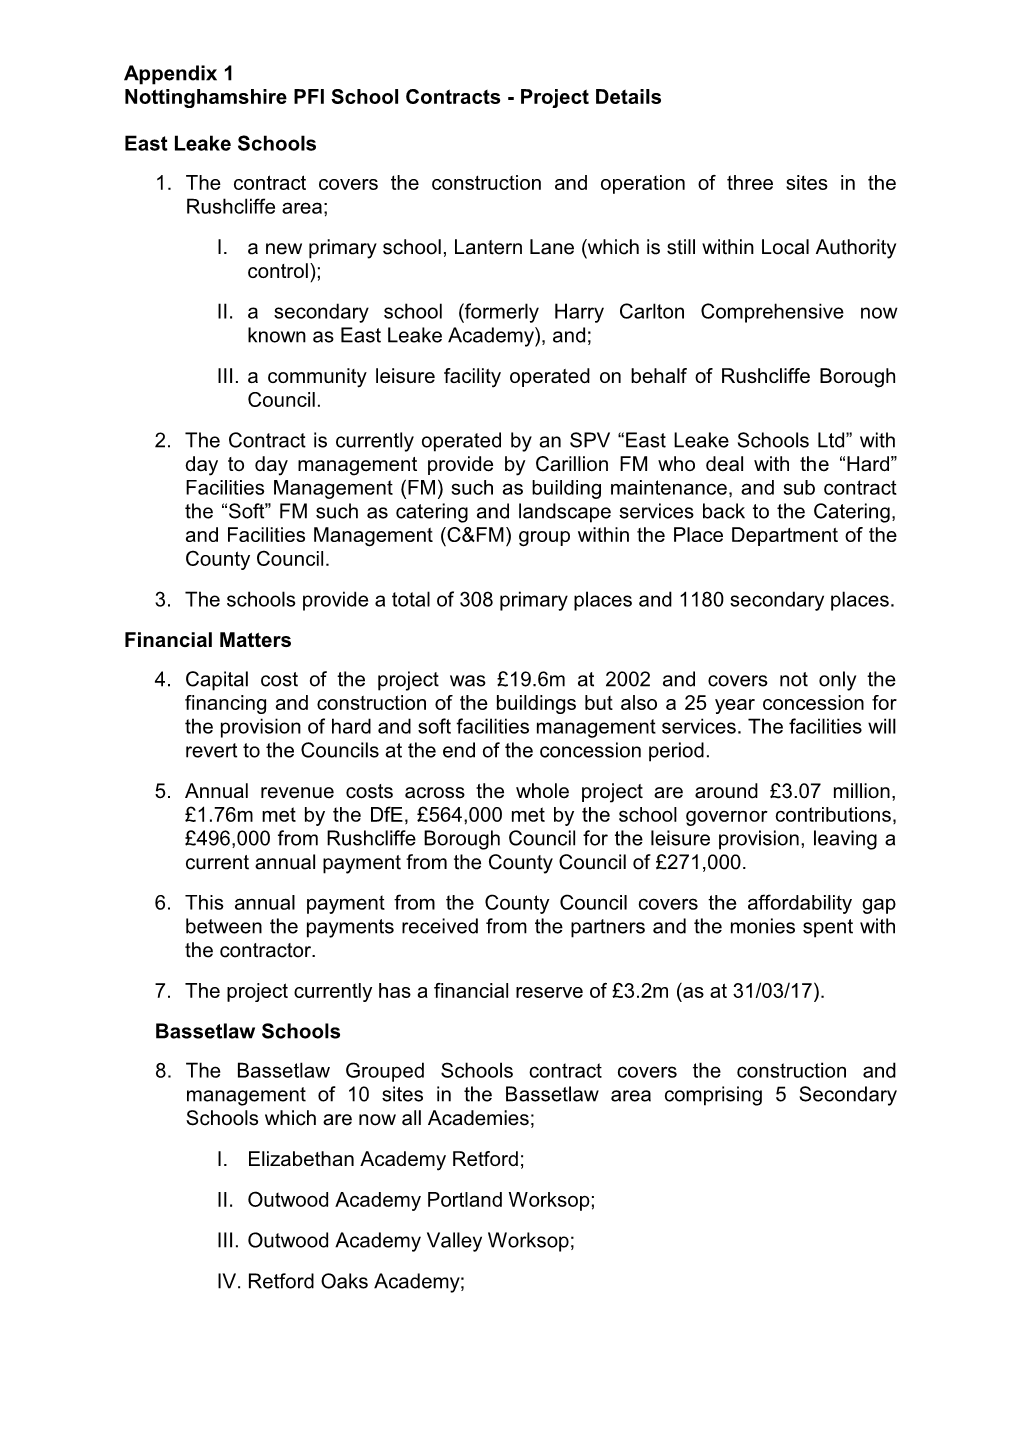 Appendix 1 Nottinghamshire PFI School Contracts - Project Details